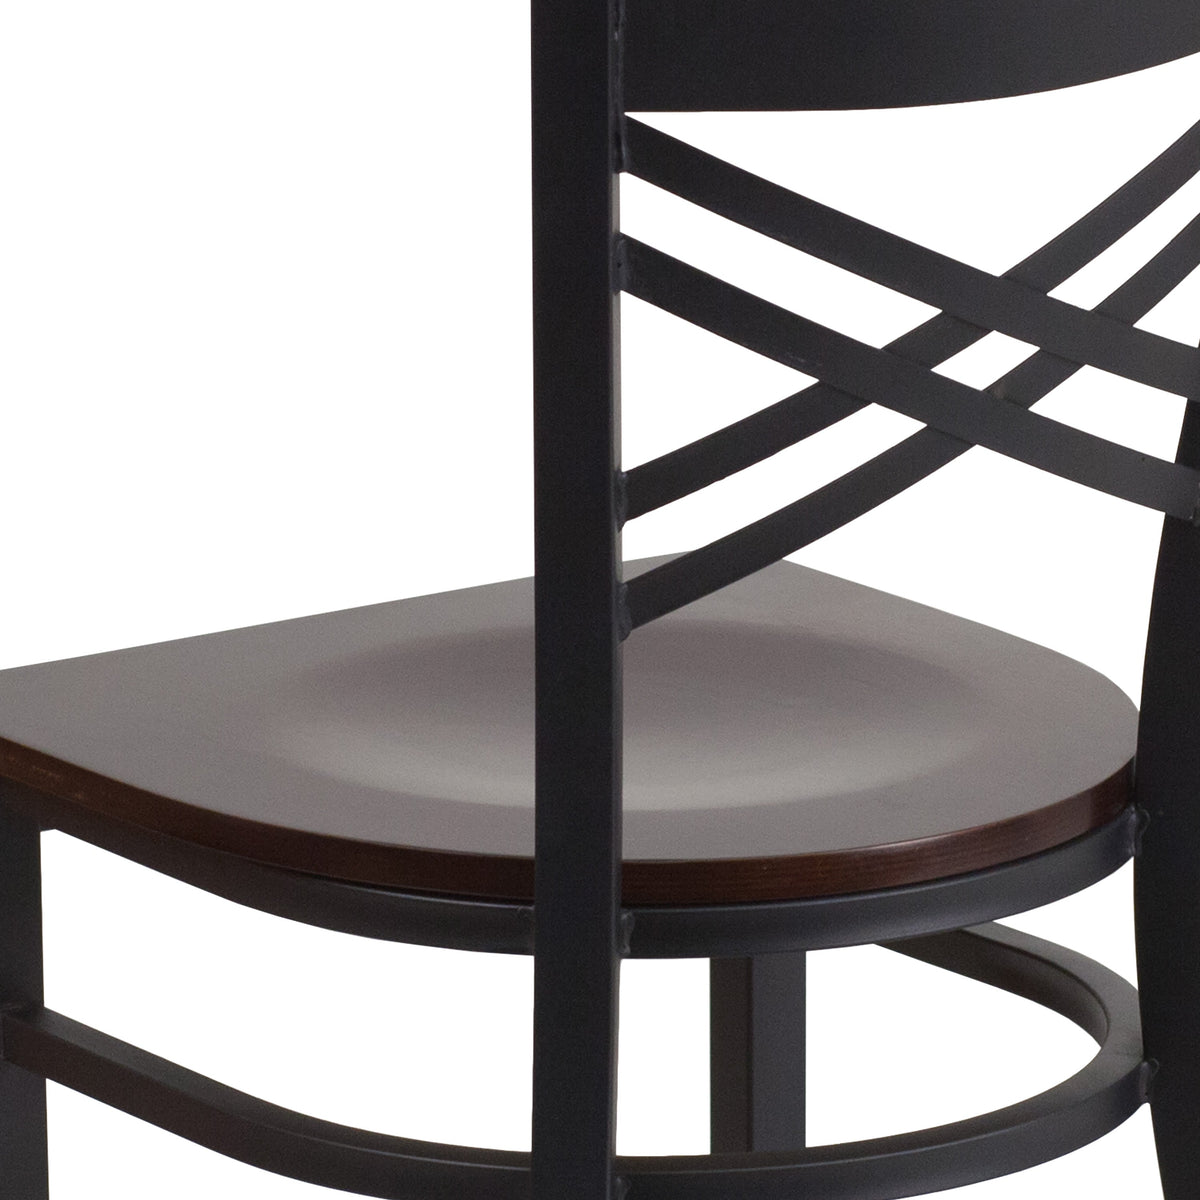 Walnut Wood Seat/Black Metal Frame |#| Black inchXinch Back Metal Restaurant Chair - Walnut Wood Seat